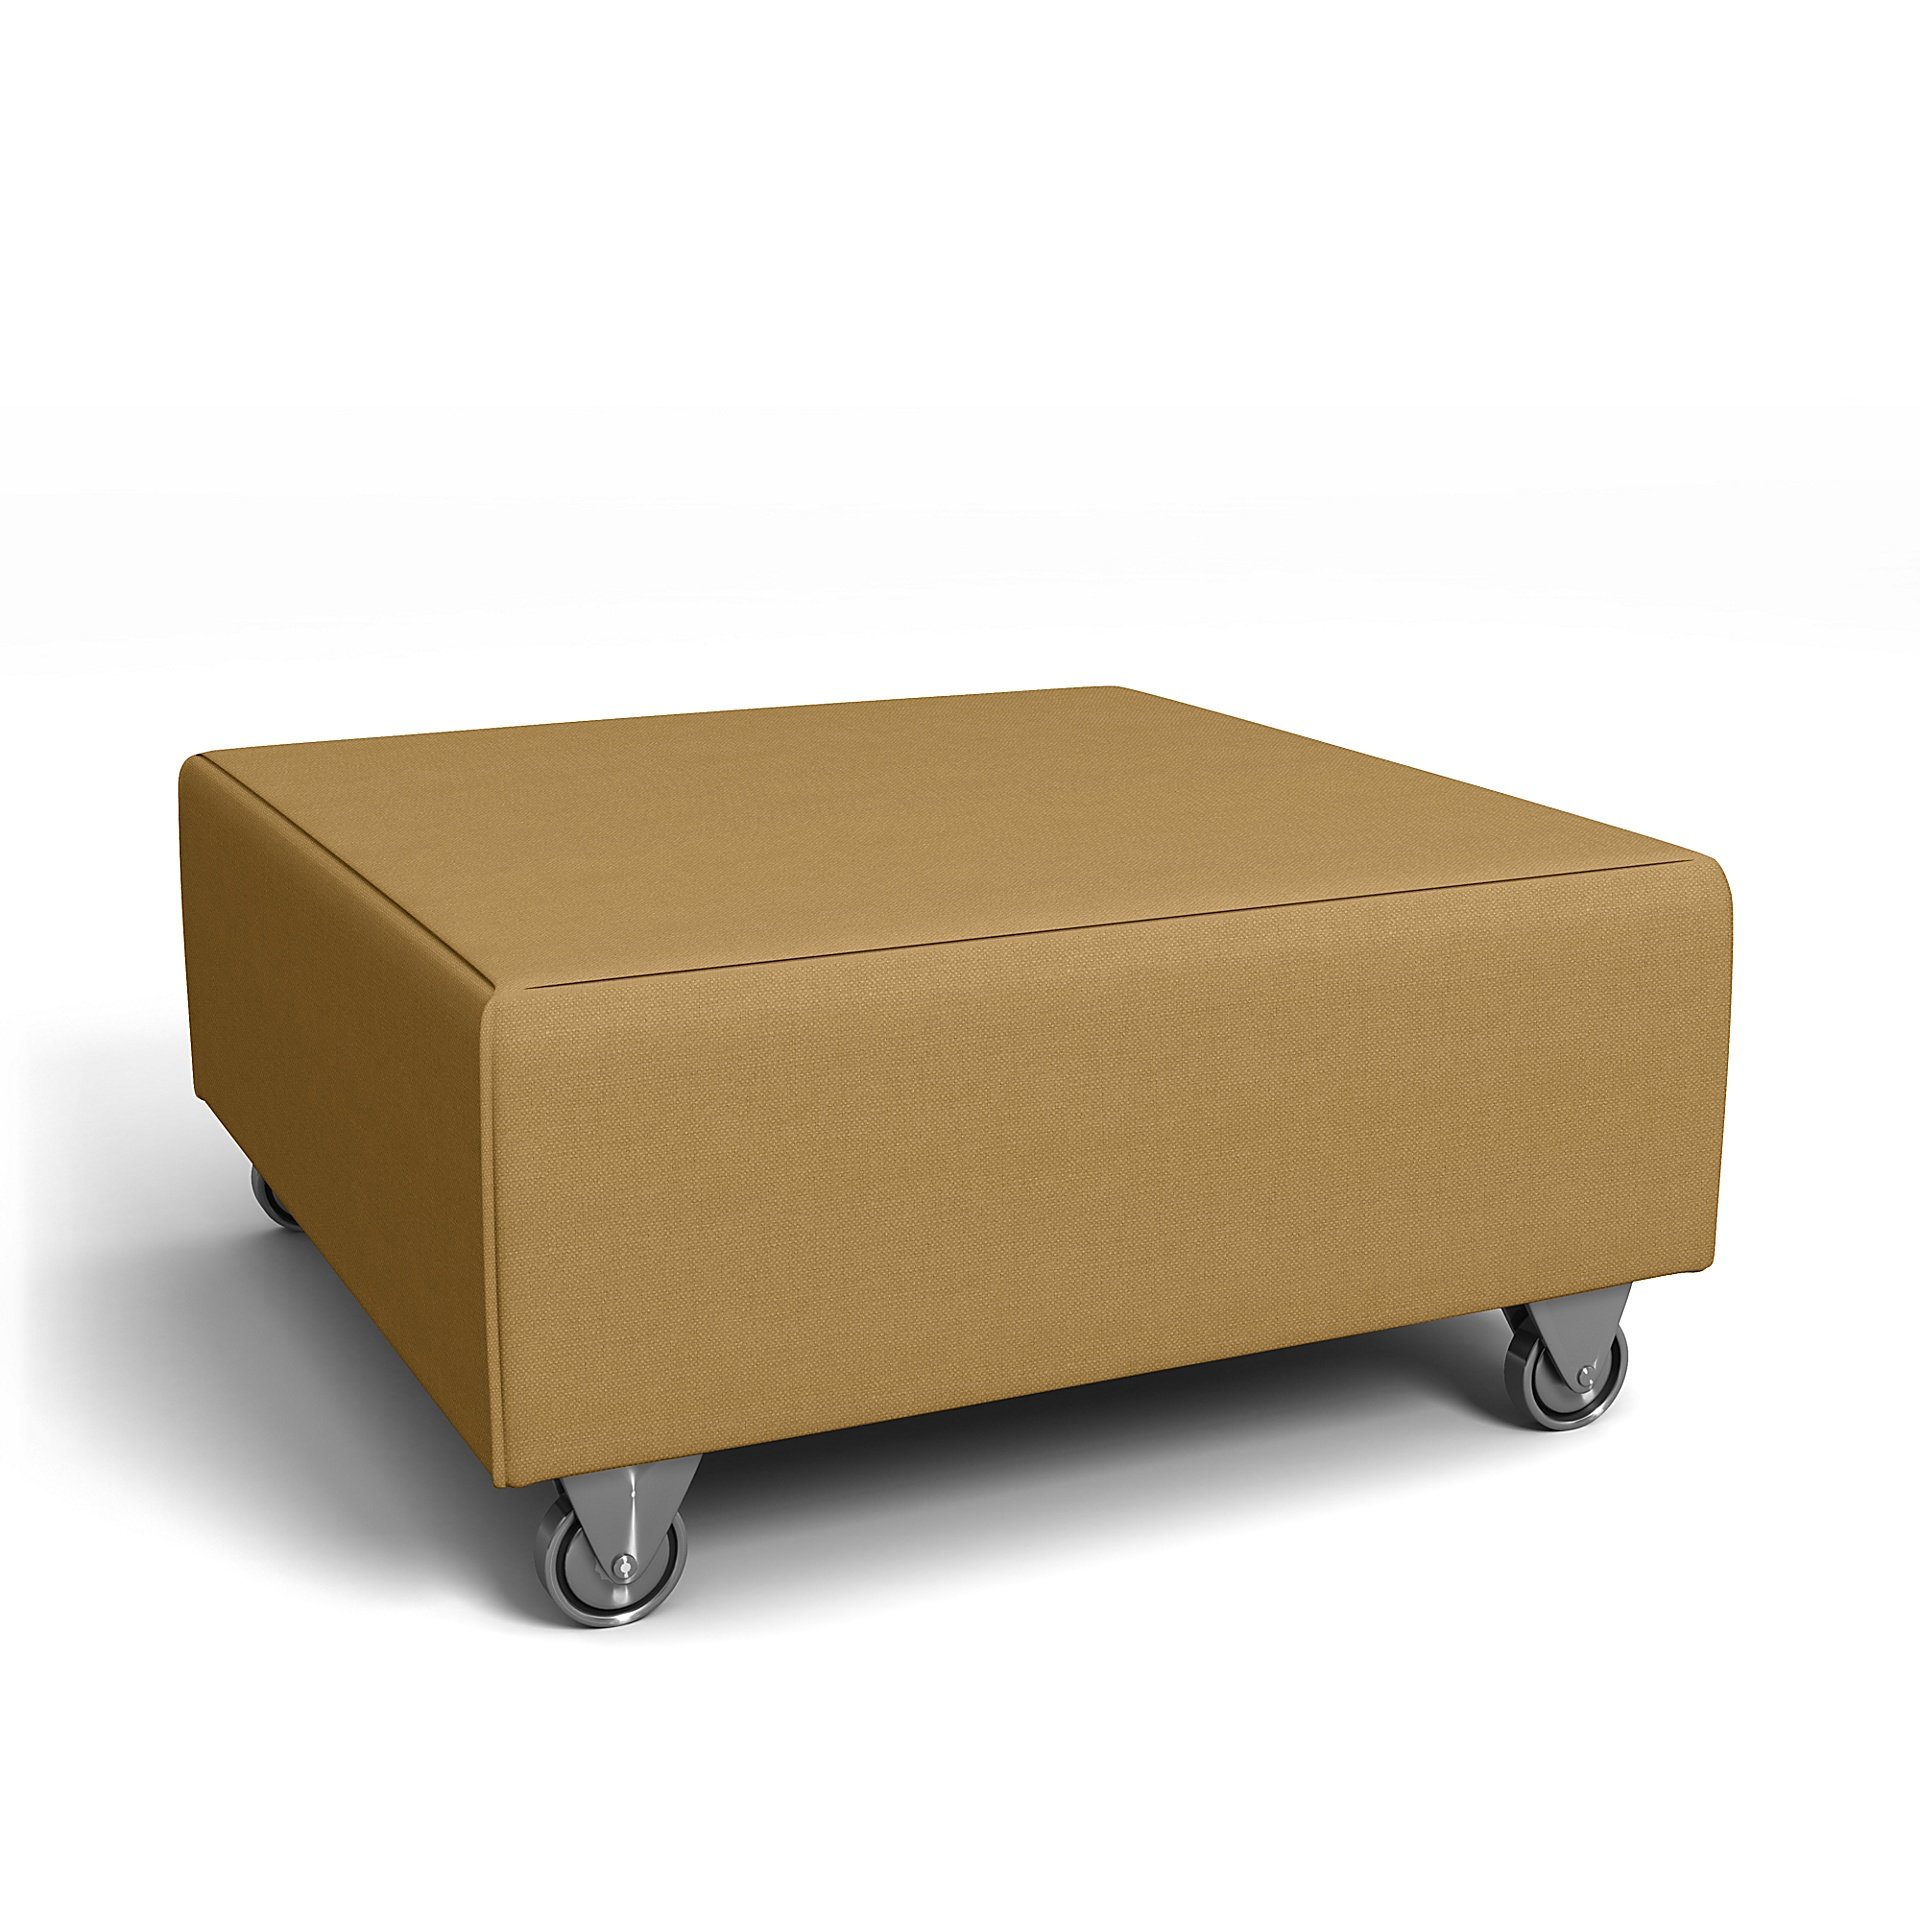 IKEA - Falsterbo Footstool Cover, Mustard, Linen - Bemz